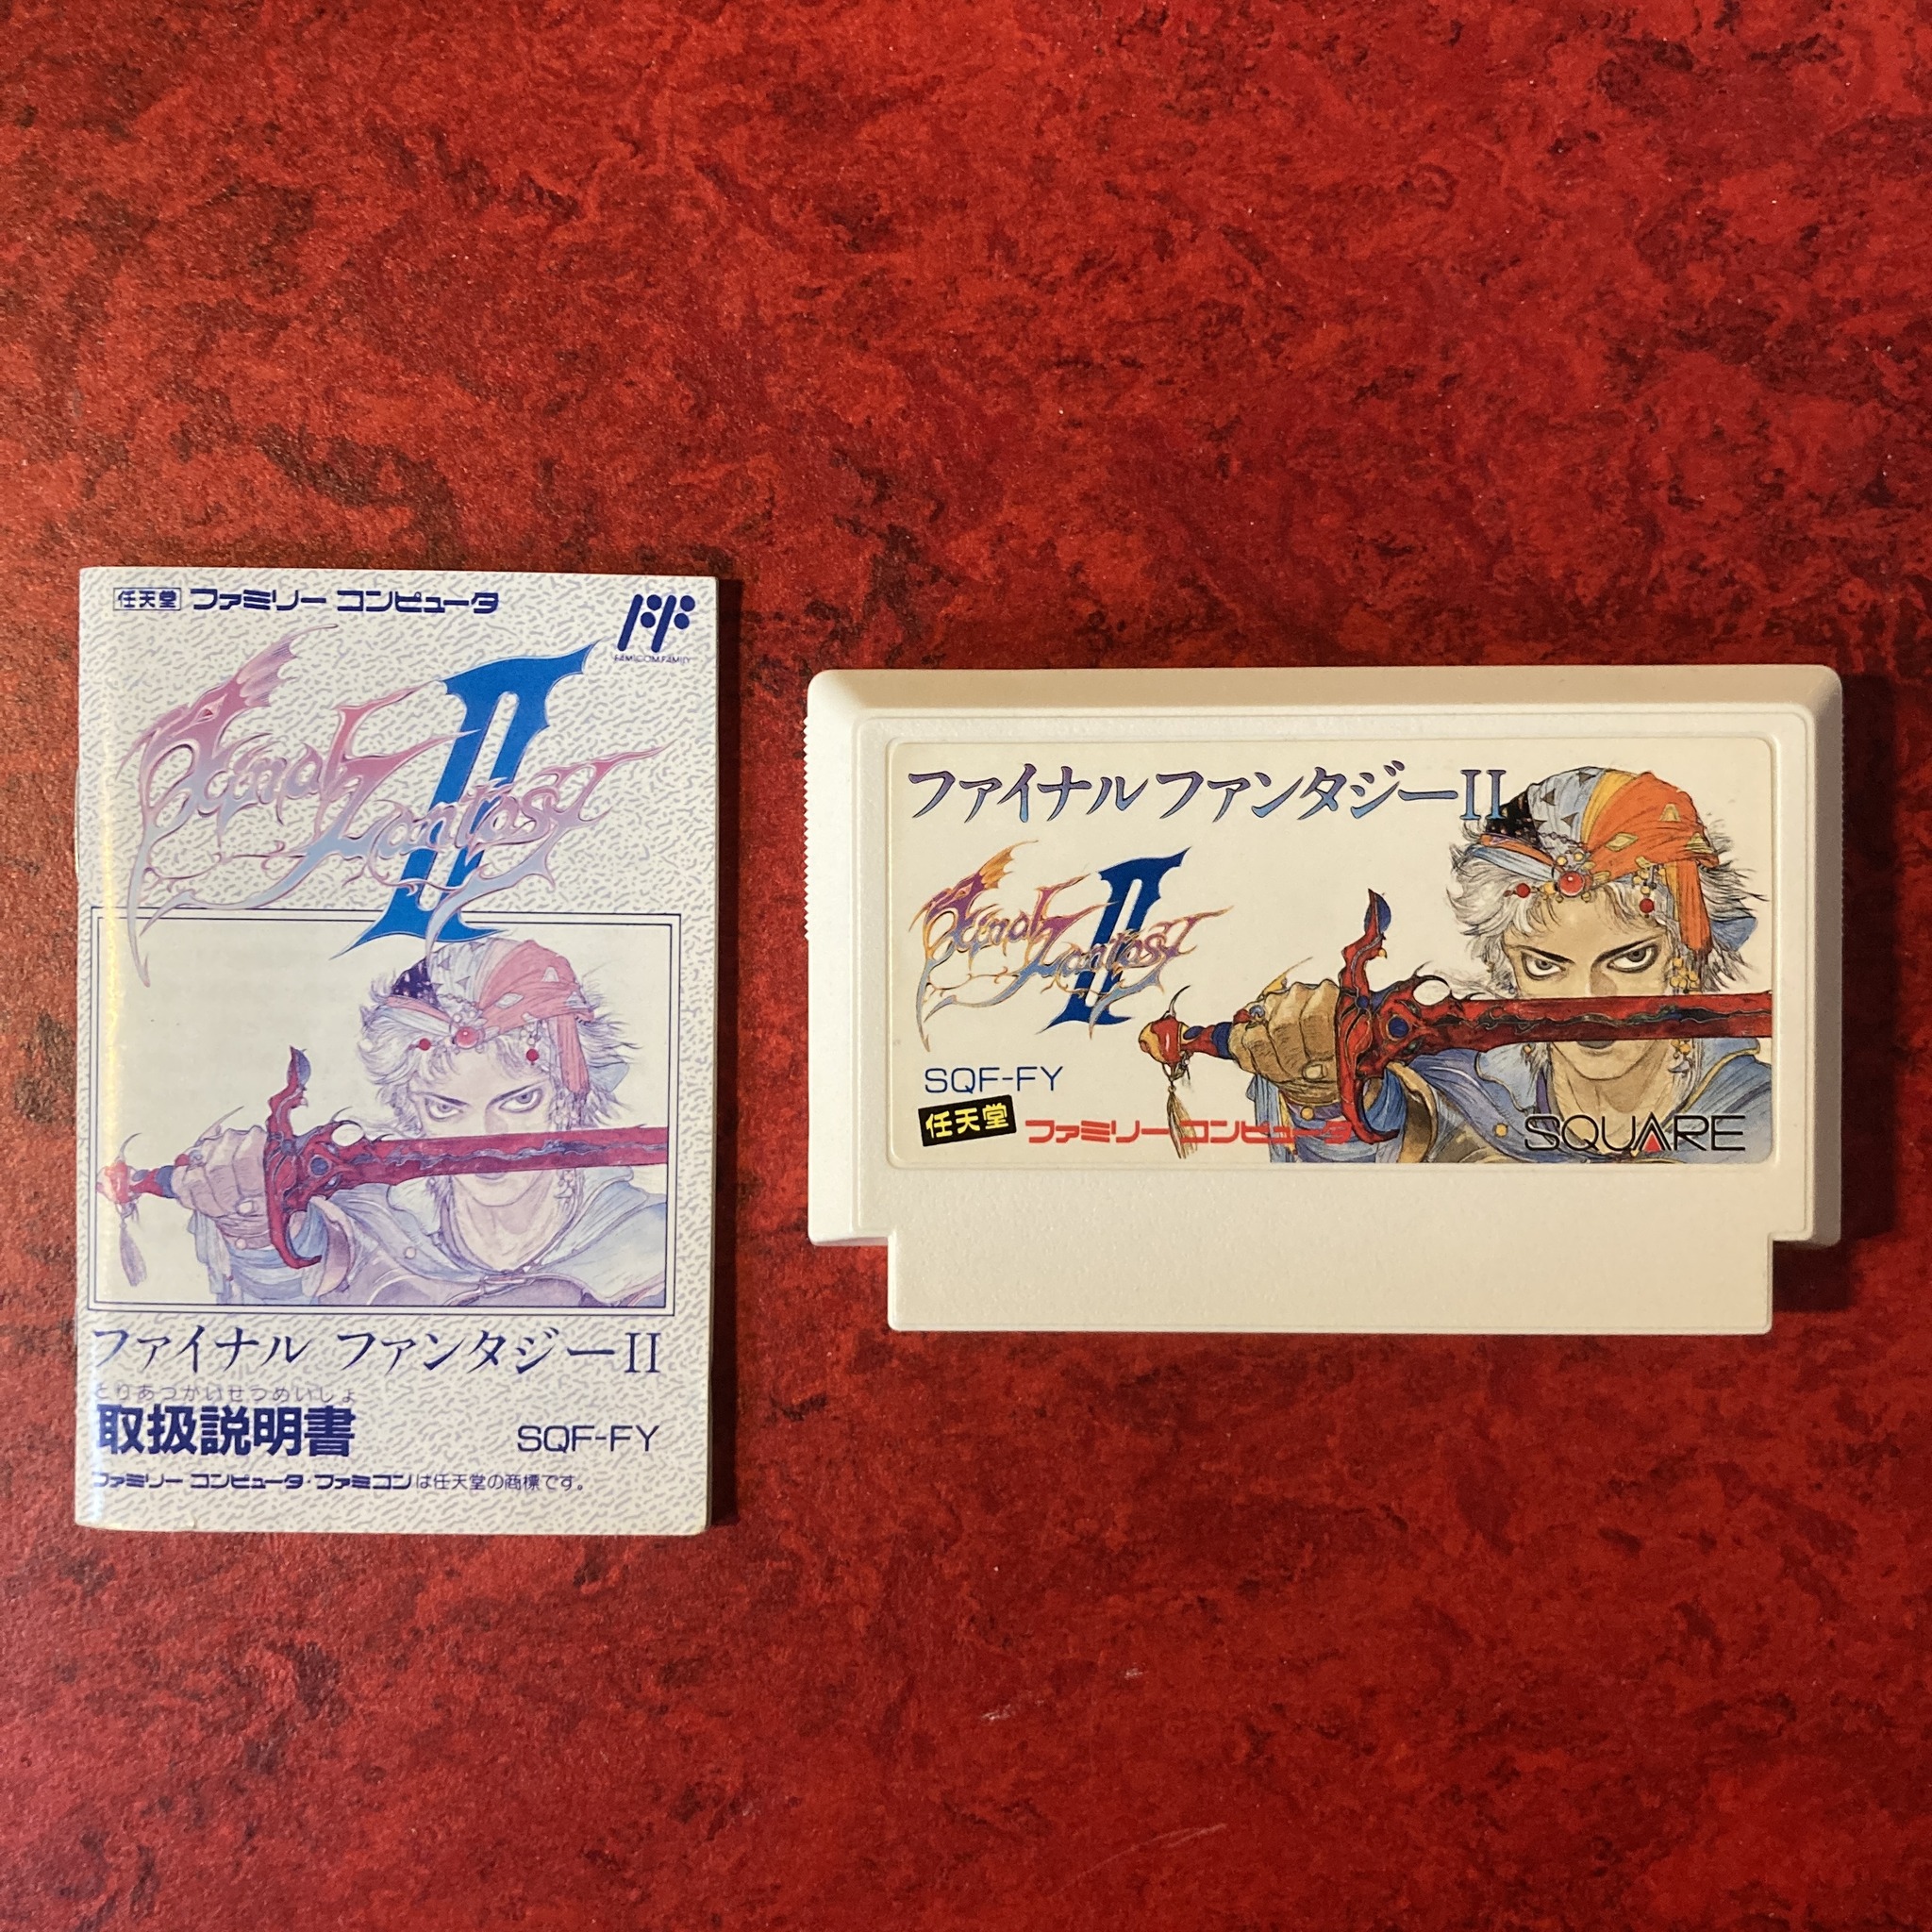 Final Fantasy II (Famicom)